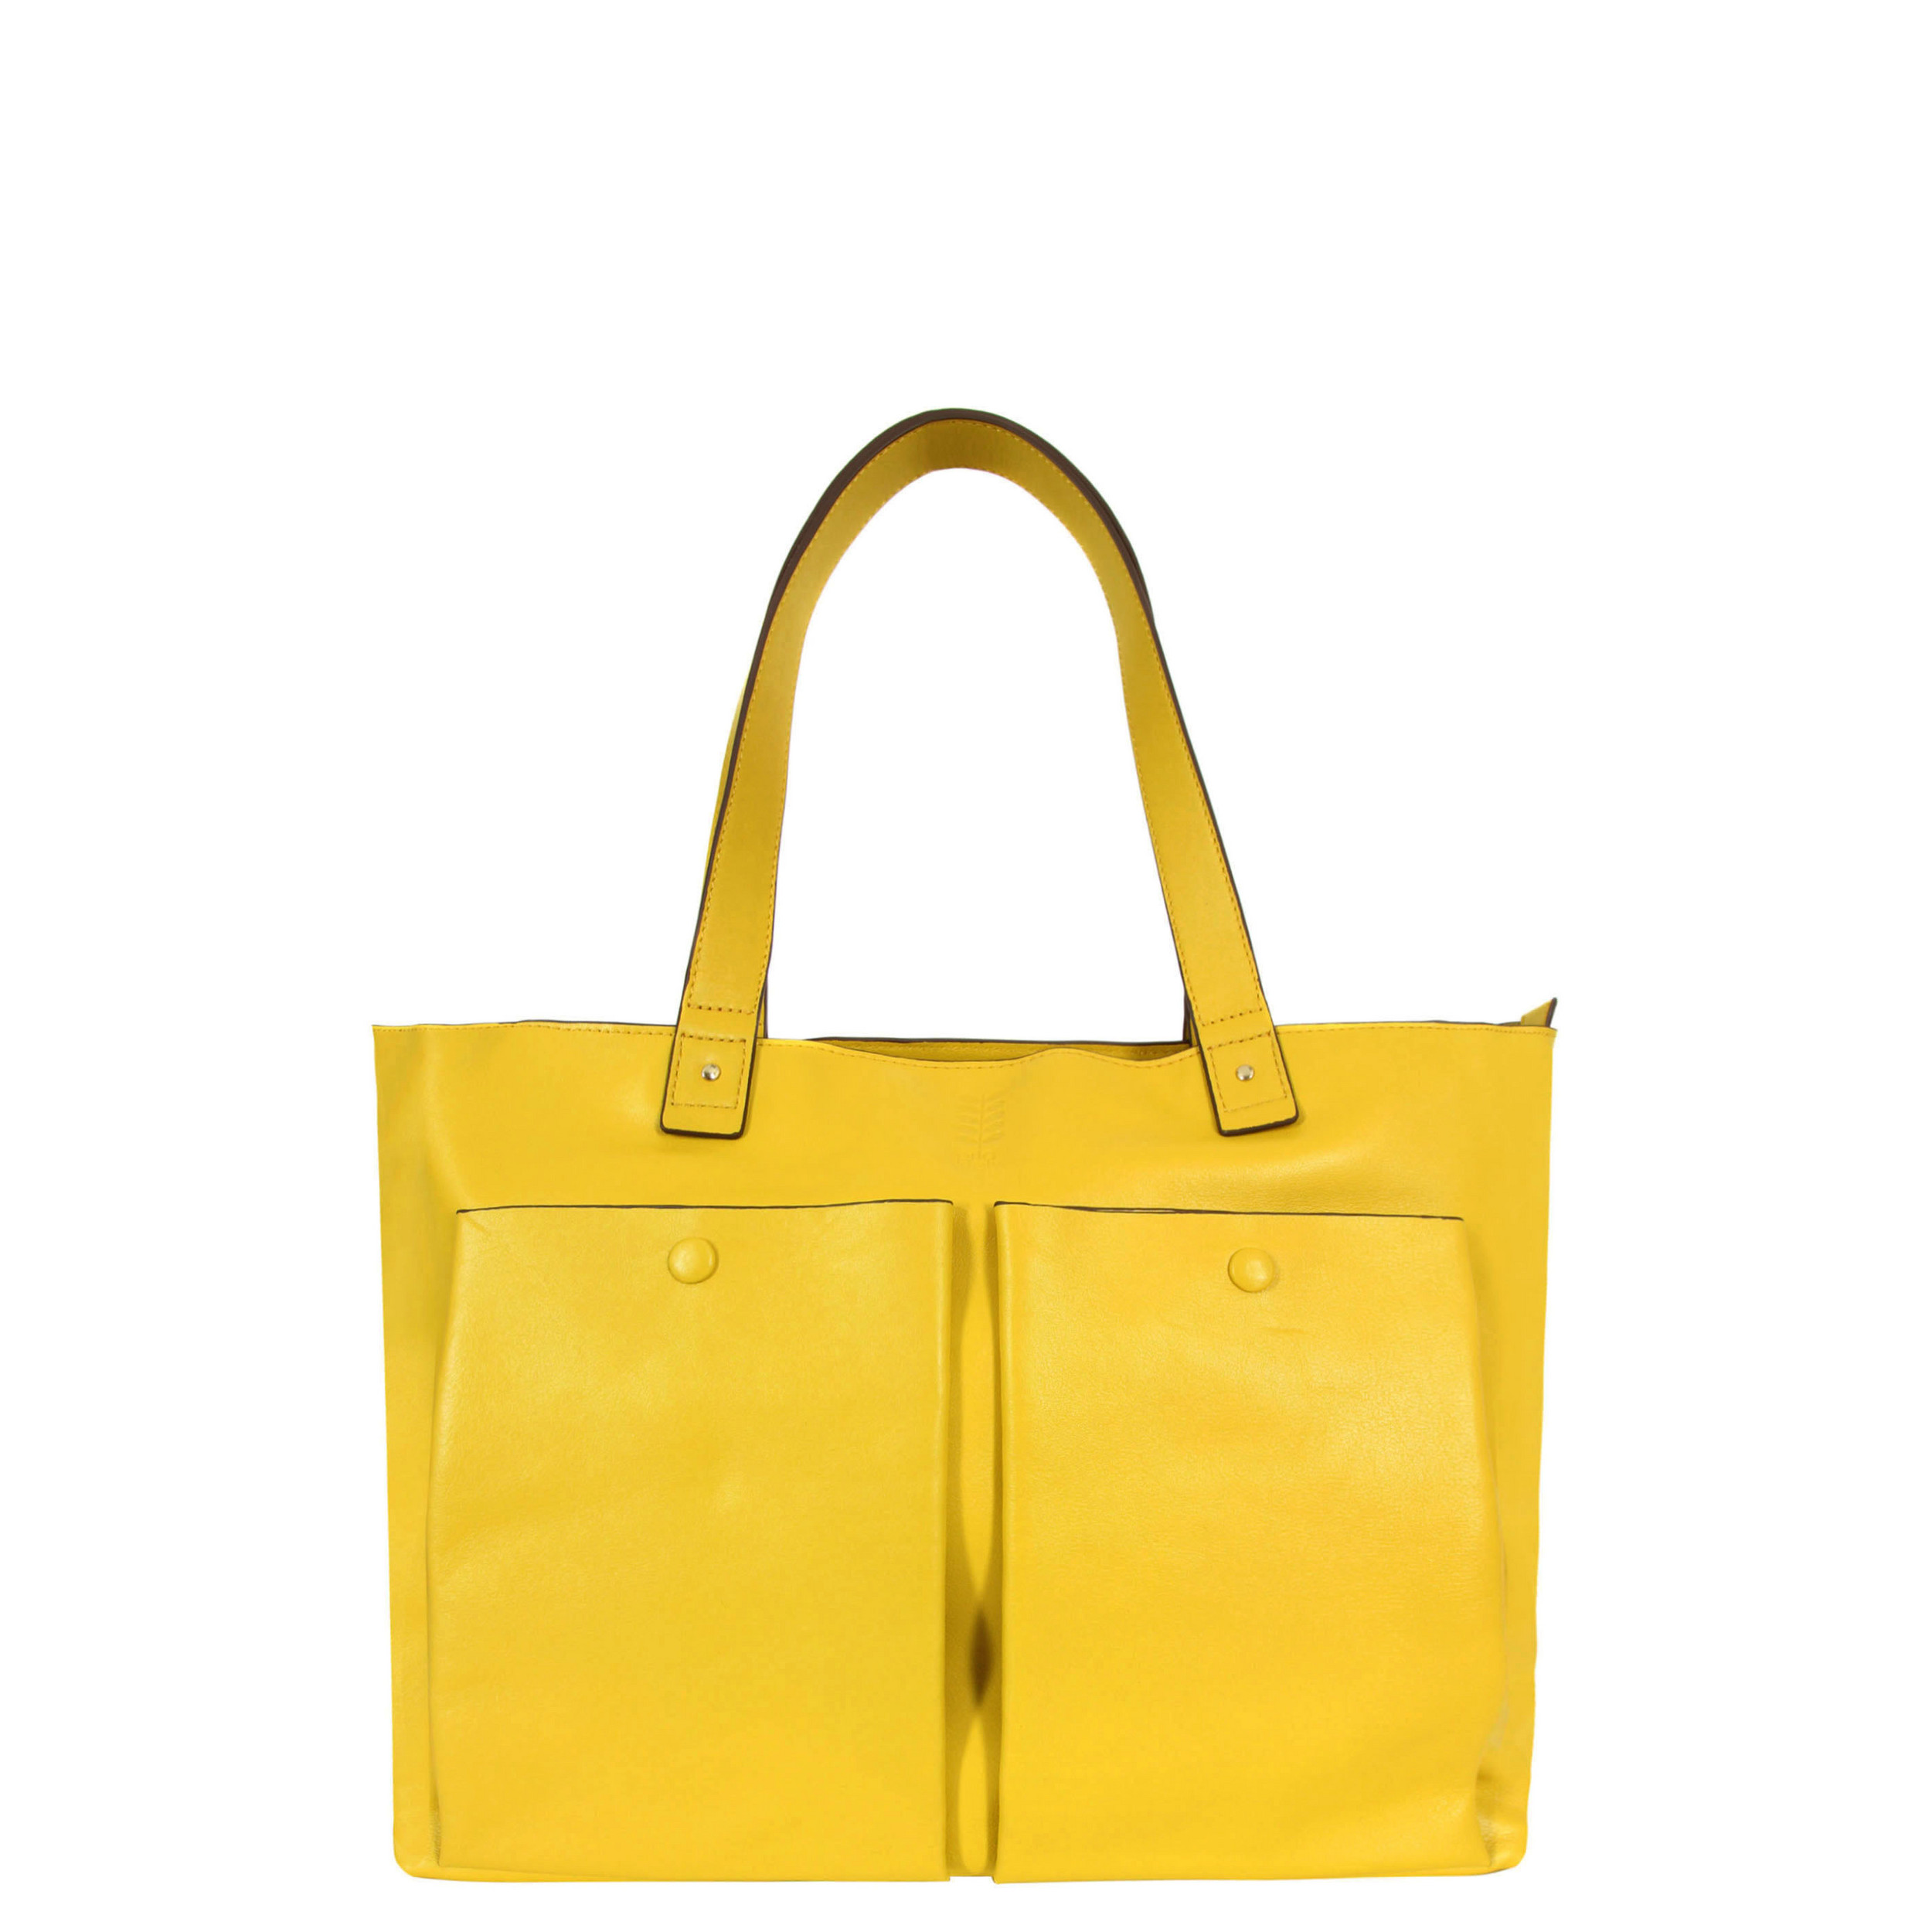 Orla kiely Shoulder Bag in Yellow | Lyst